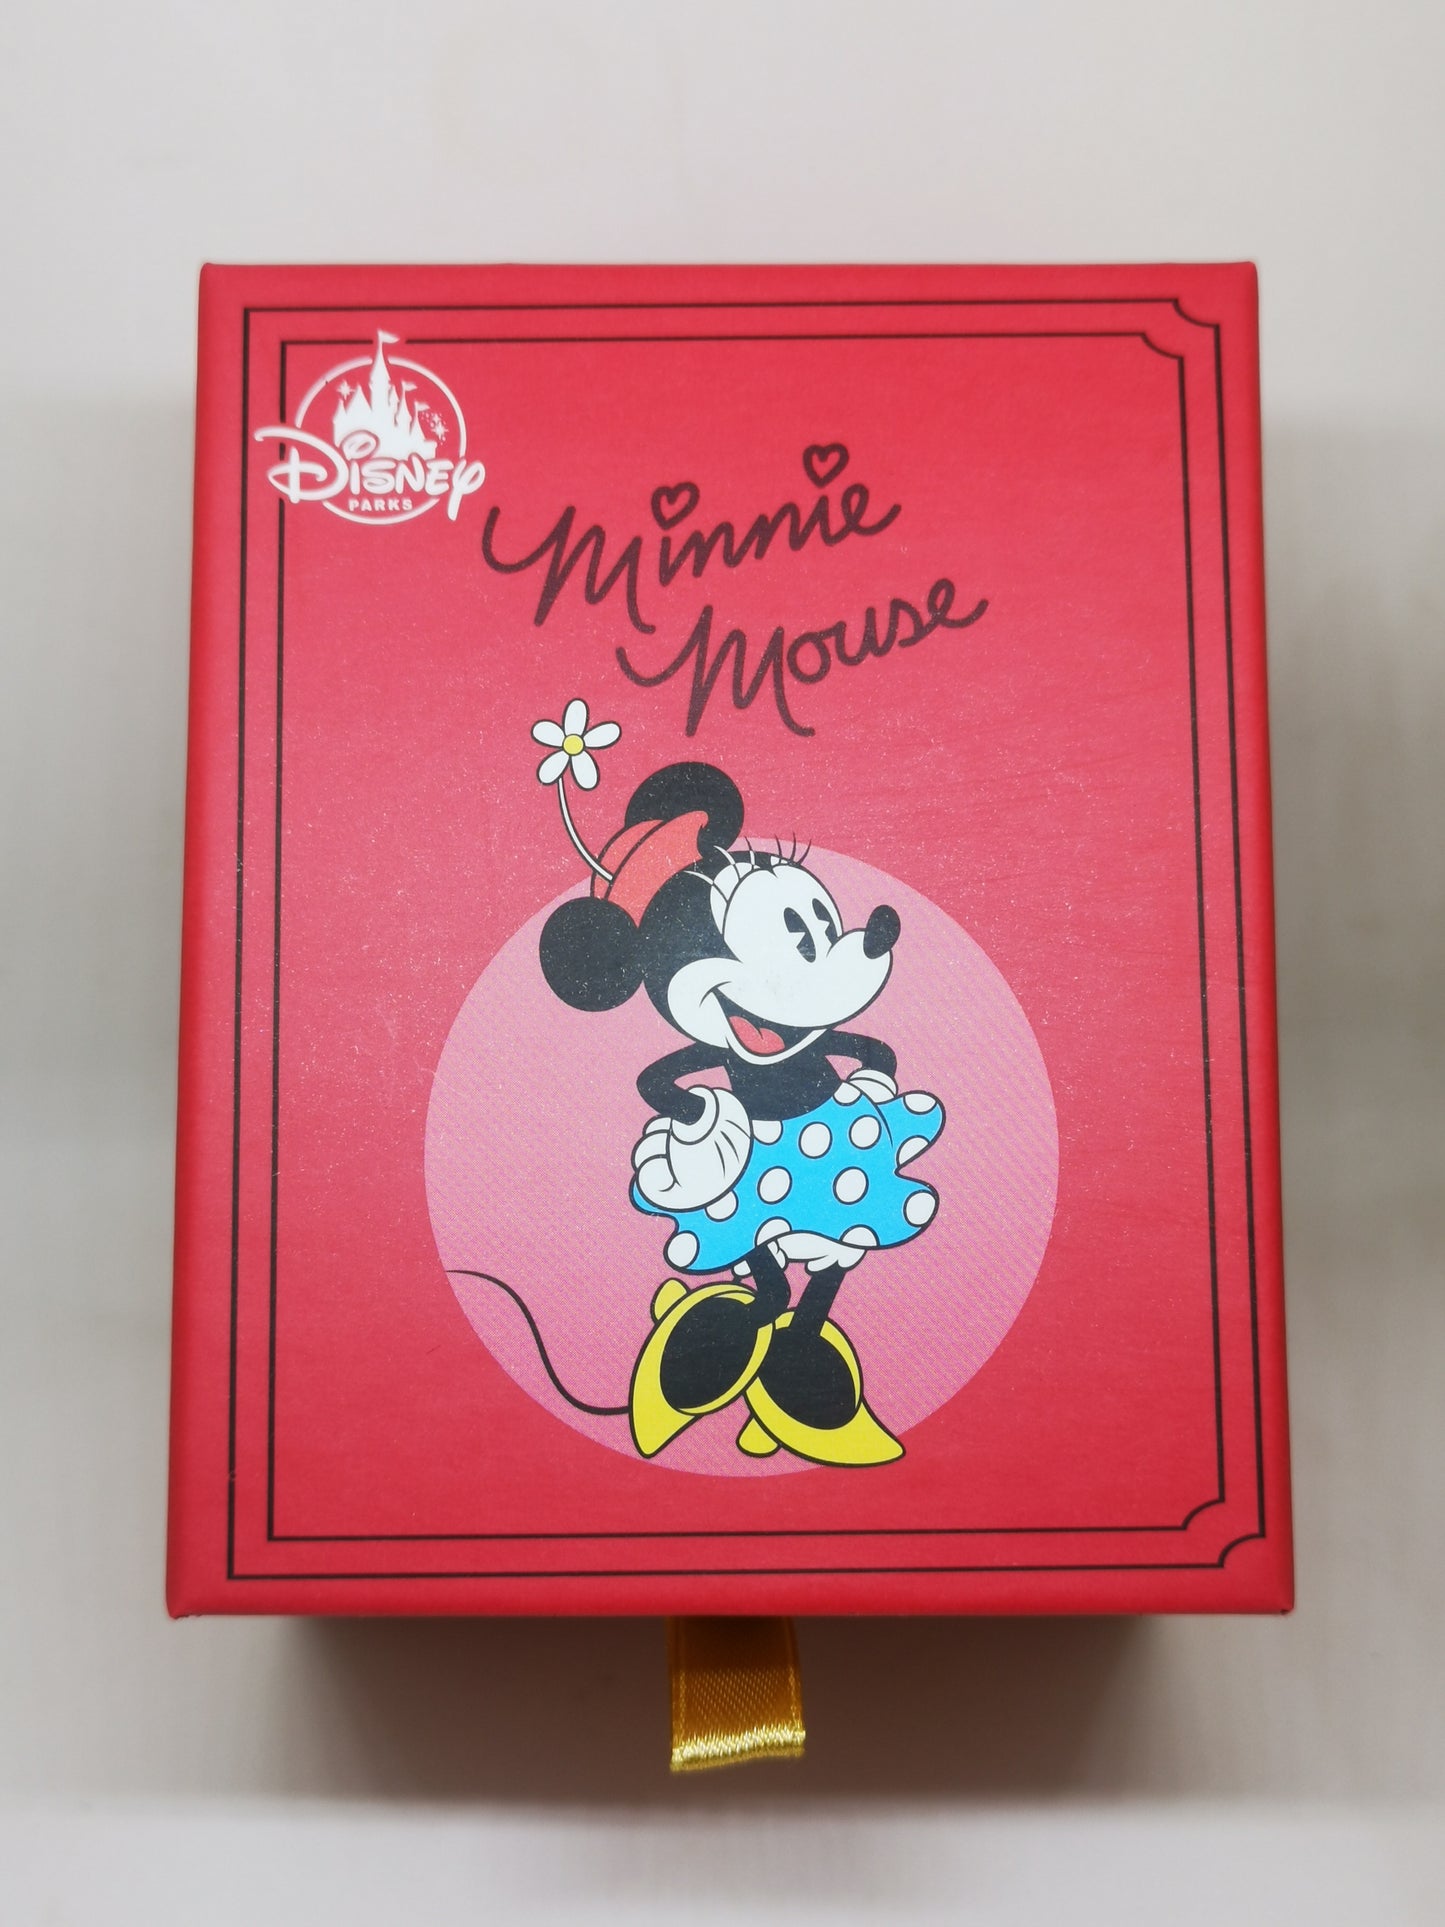 Disney Minnie Mouse Watches Watch Hong Kong HK Disneyland NEW!